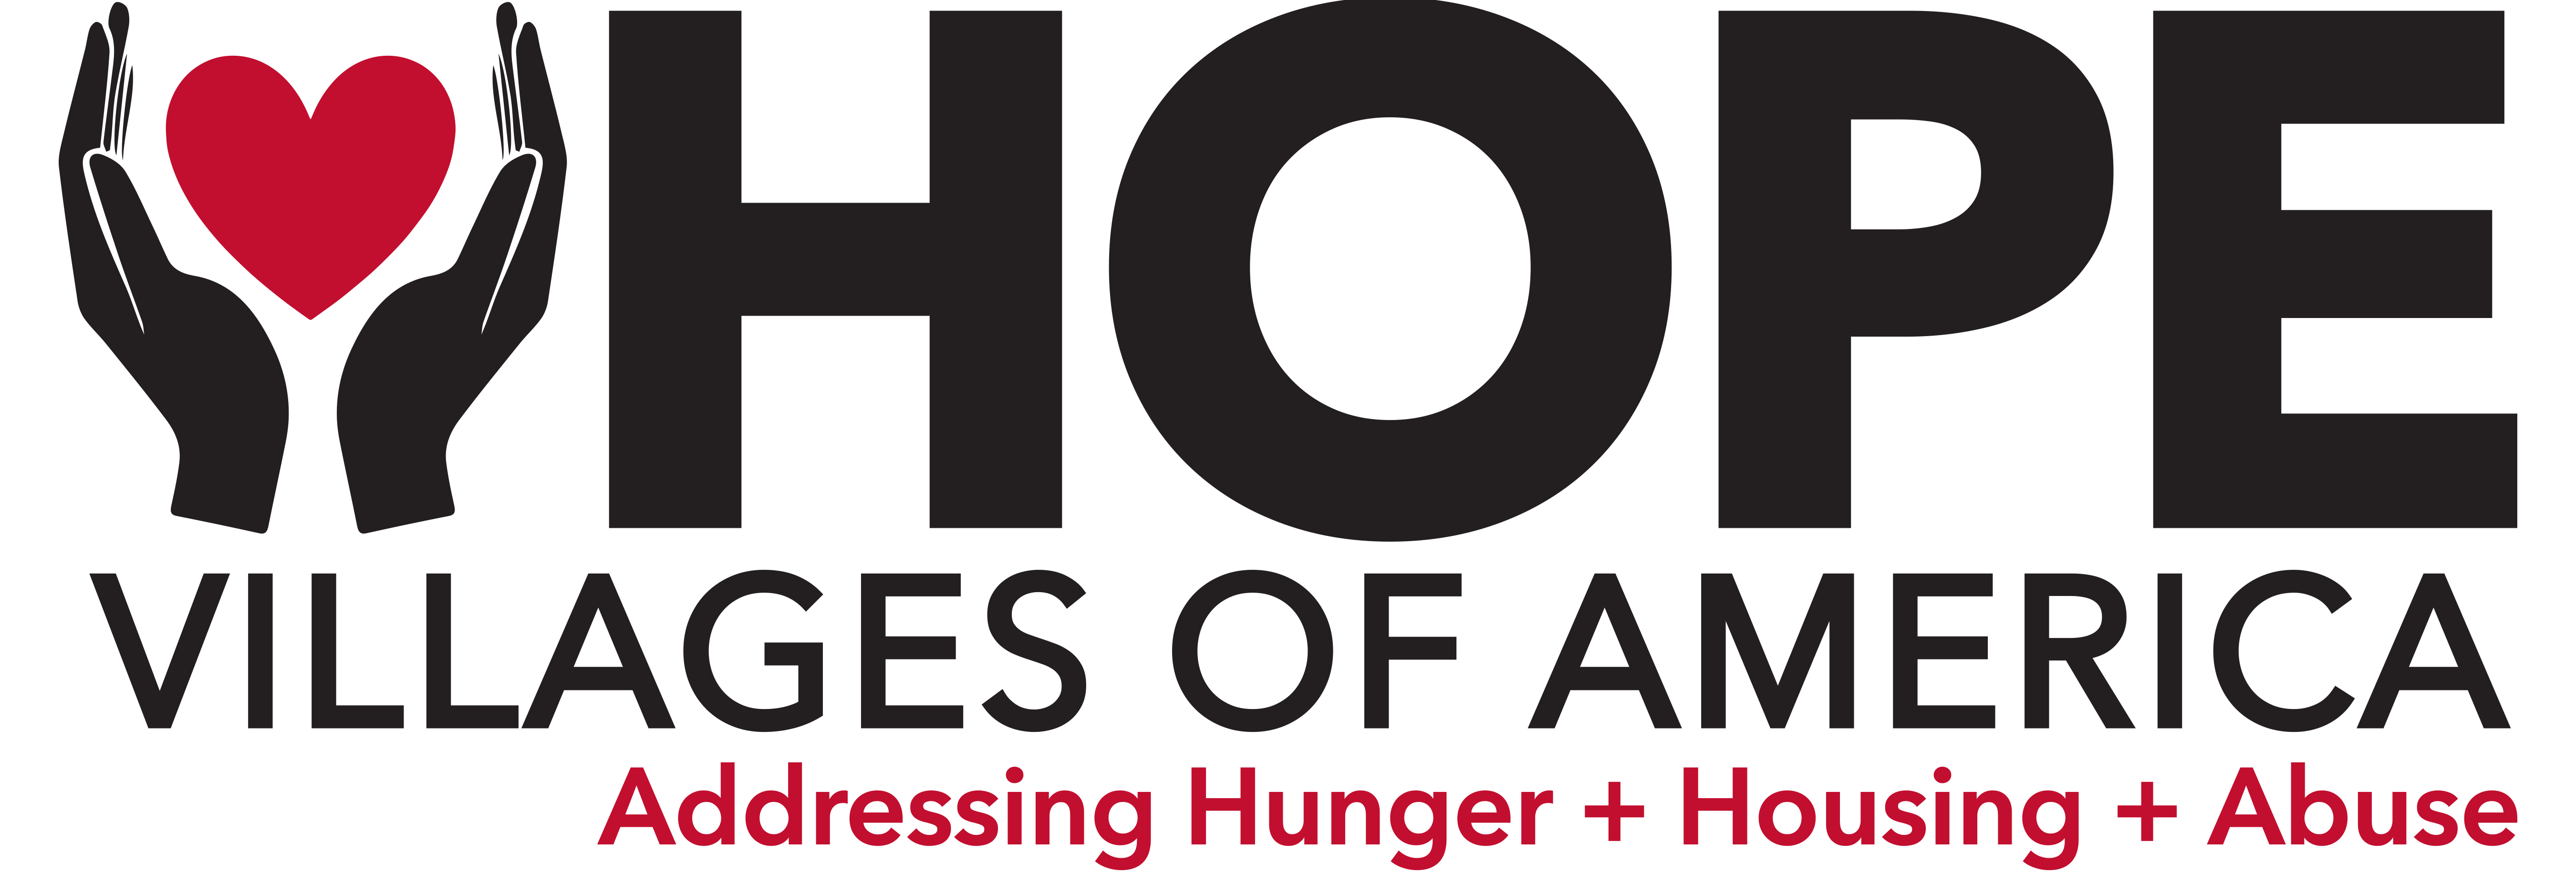 Hope Villages of America - Addressing Hunger + Housing + Abuse